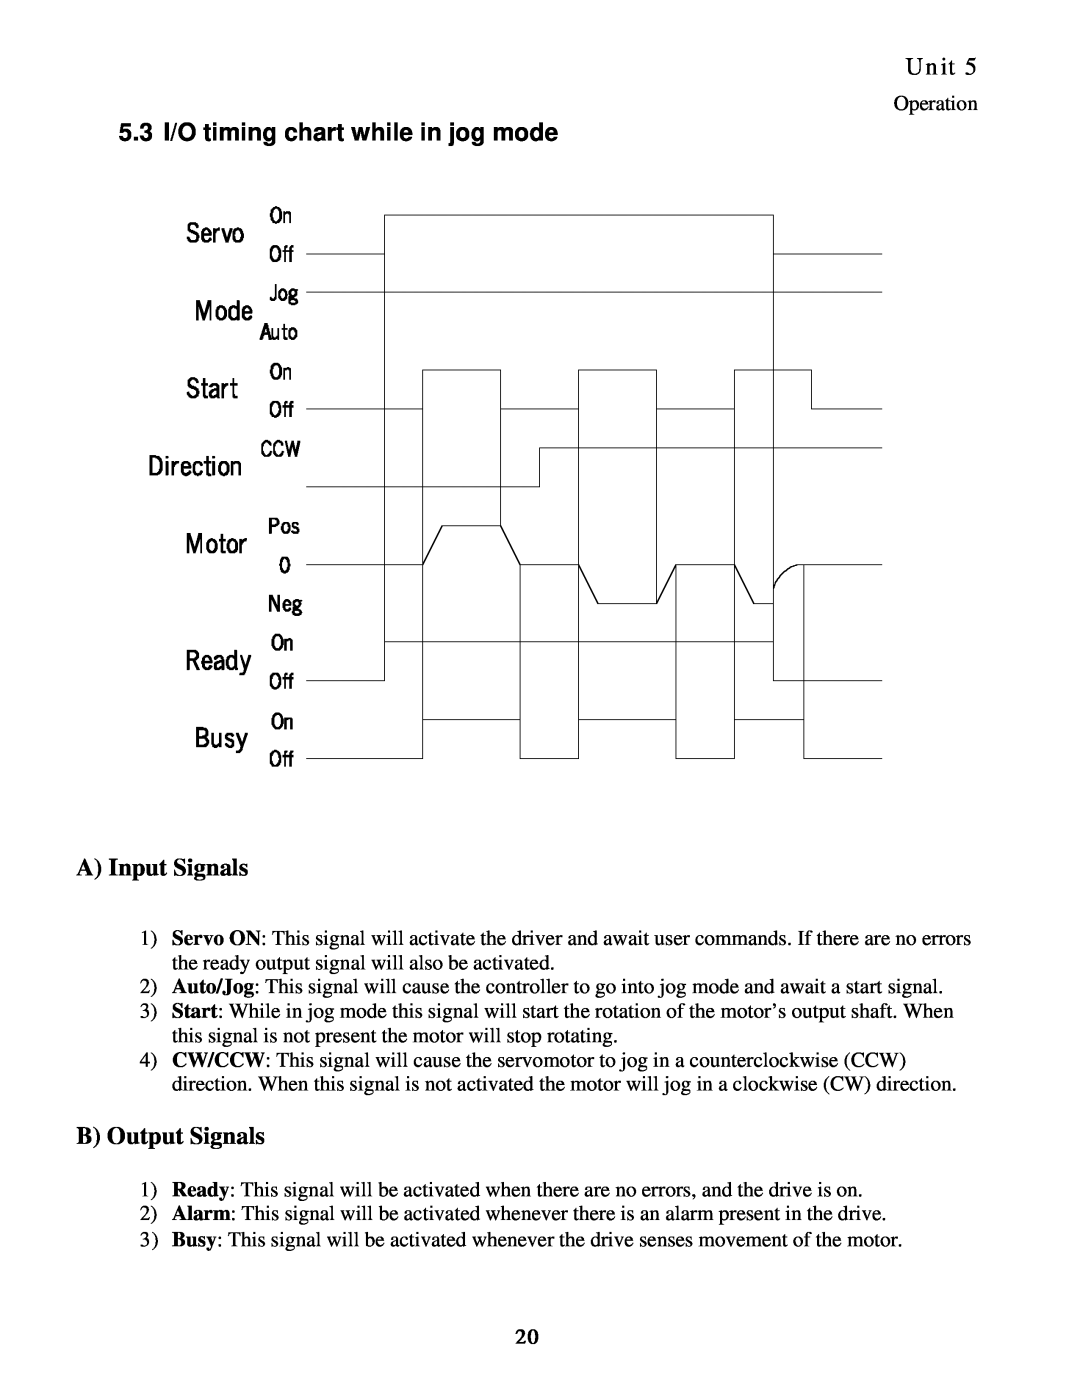 Sankyo 11AR manual 5.3 I/O timing chart while in jog mode, AInput Signals, BOutput Signals, Unit 